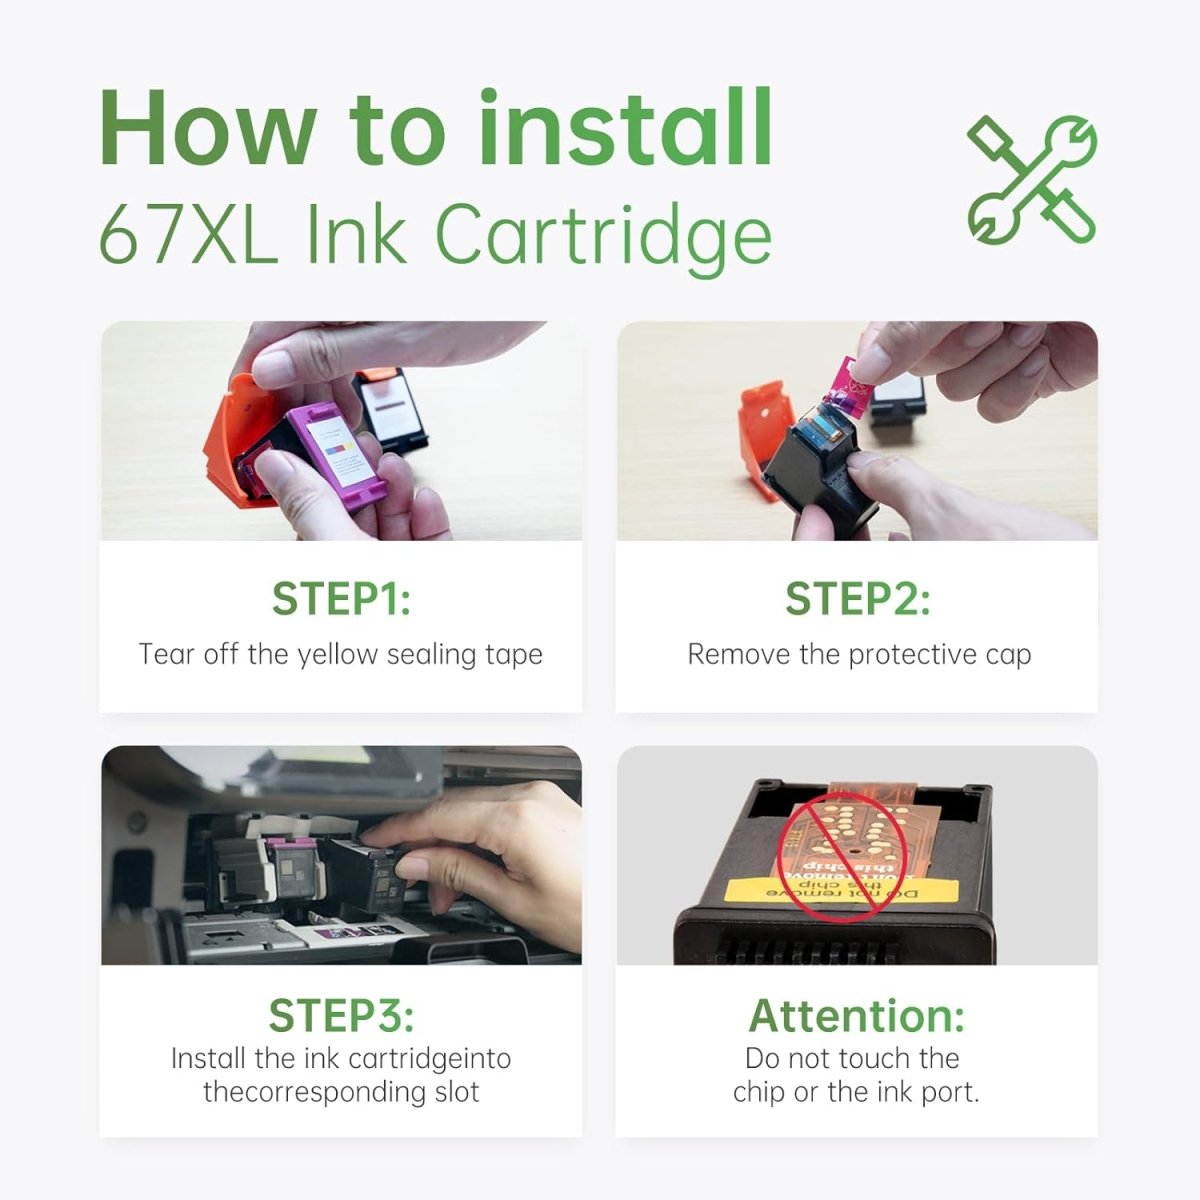 Remanufactured HP 67XL Tri-Color Ink Cartridges 2-Pack - Linford Office:Printer Ink & Toner Cartridge